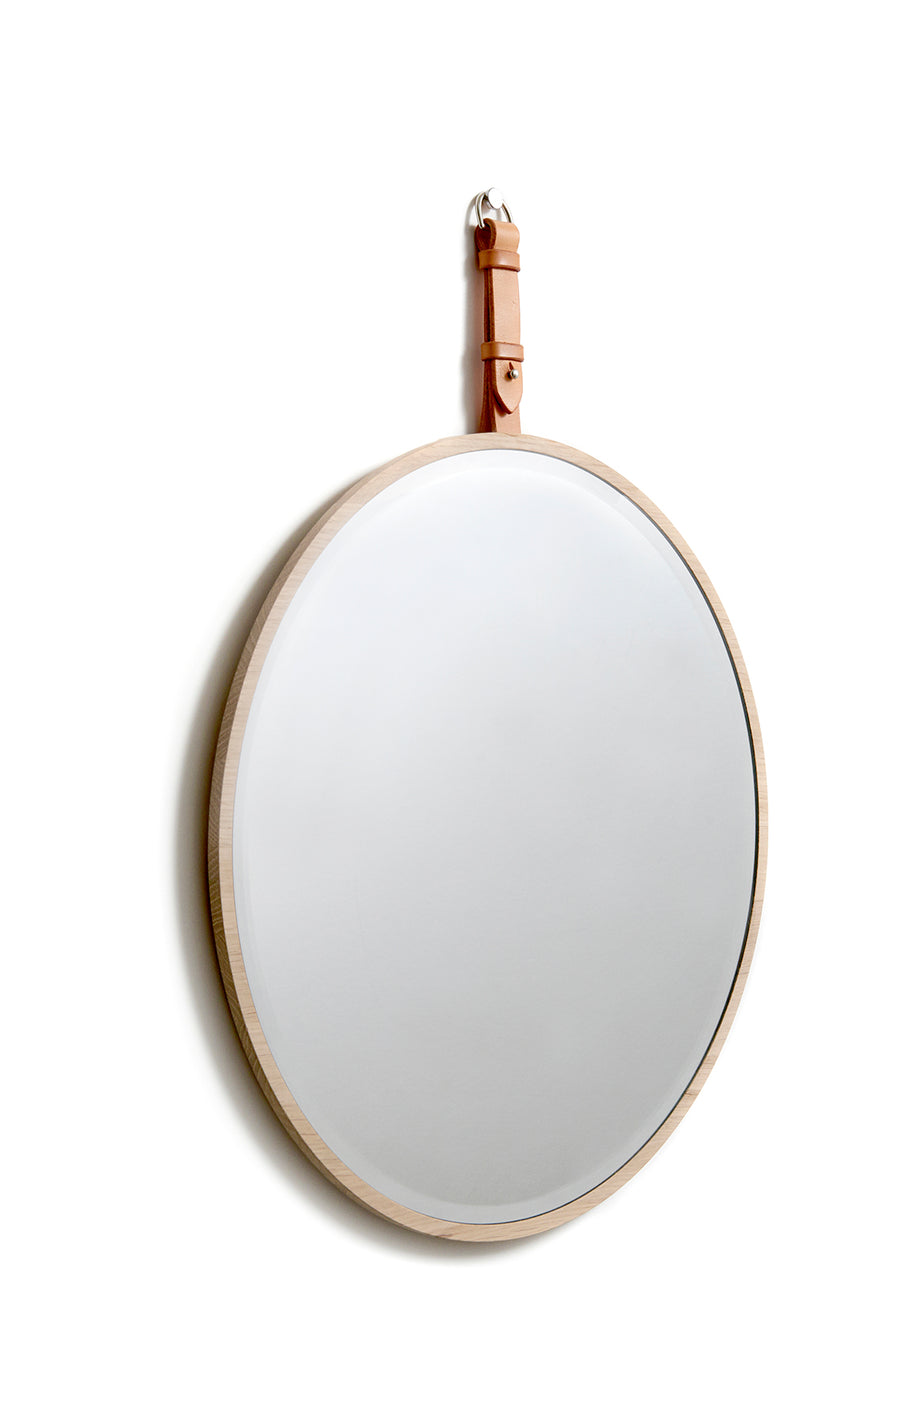 Wall mirror: EKKO (natural) leather & oak